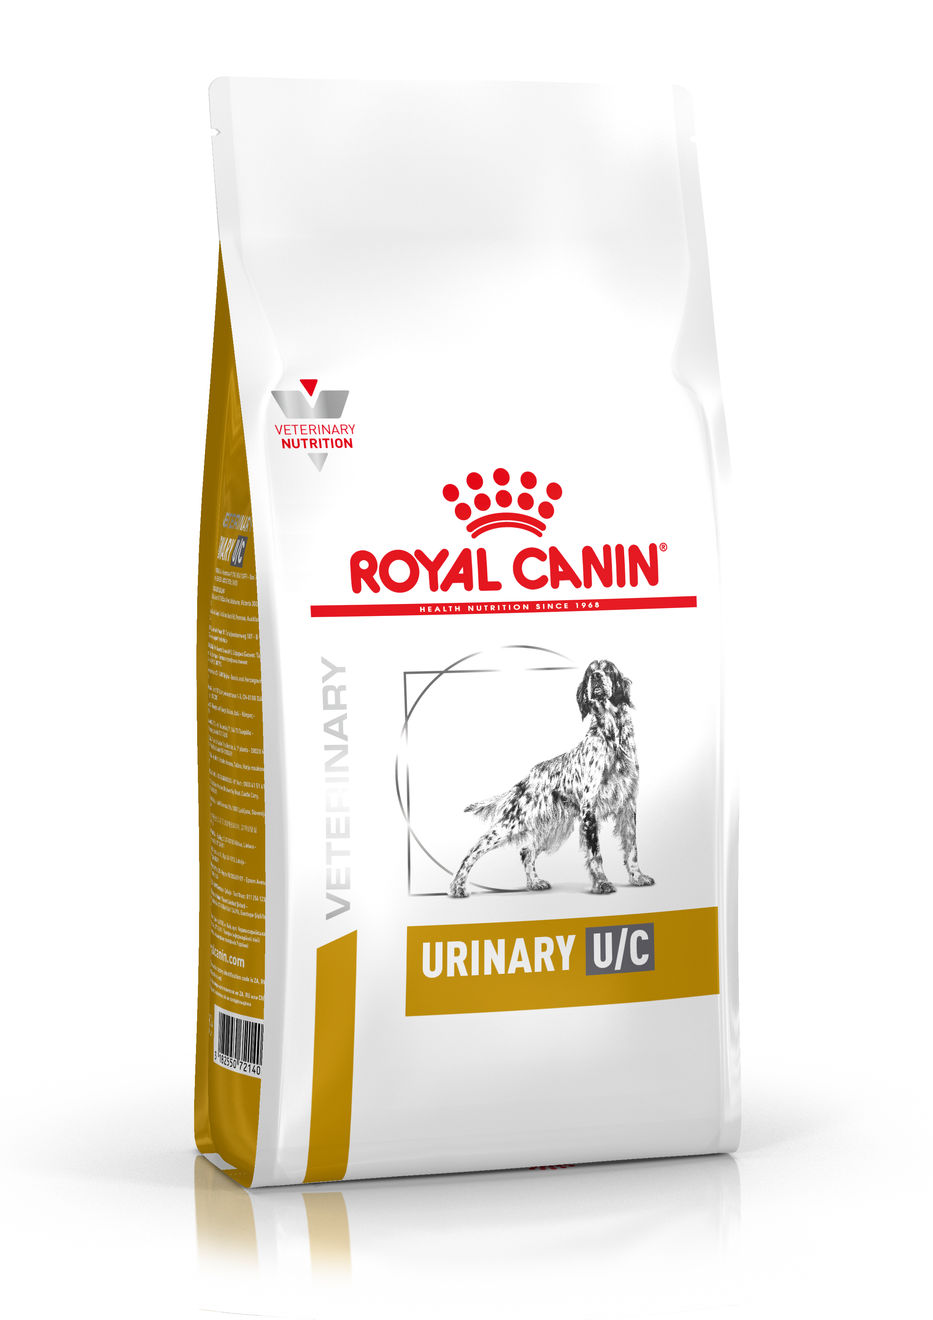 Royal Canin U/C low purine 1 x 14 kg